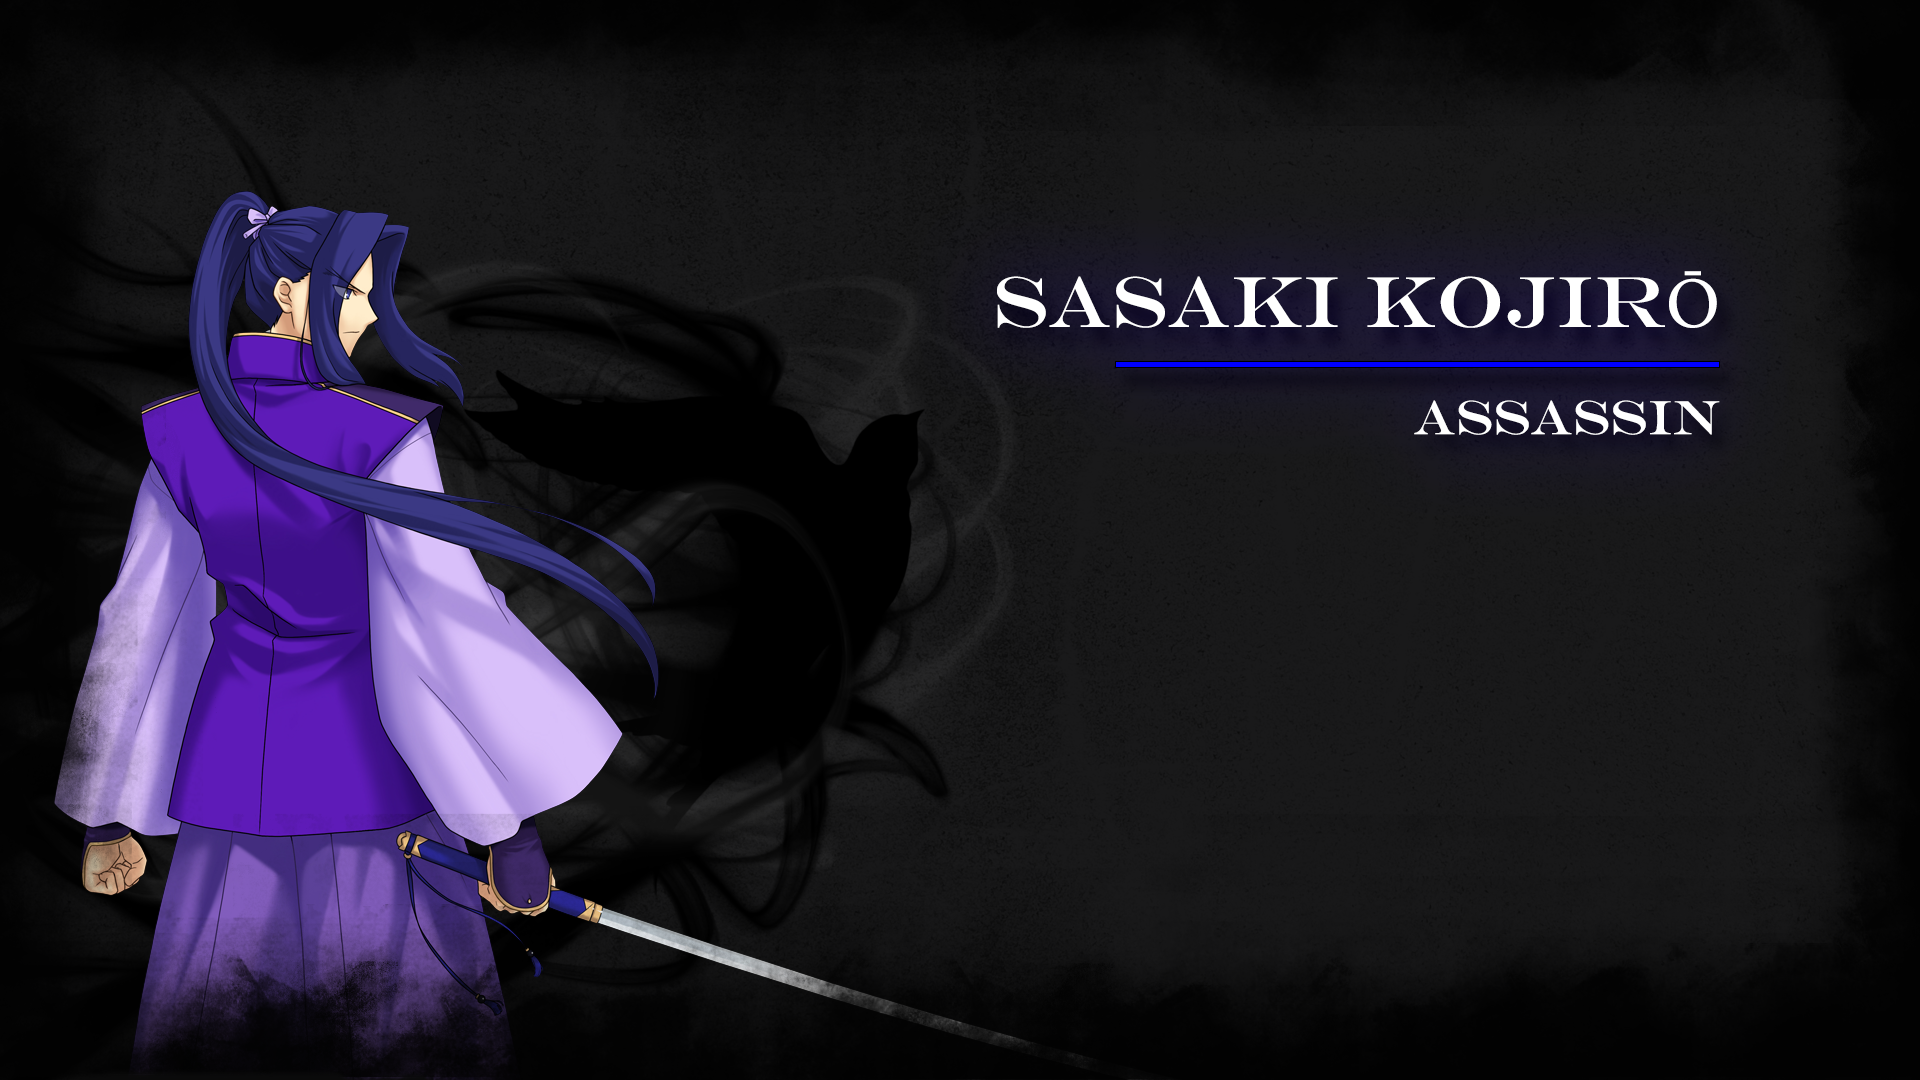 sasaki Full HD Wallpaper and Background Image | 1920x1080 | ID:525400